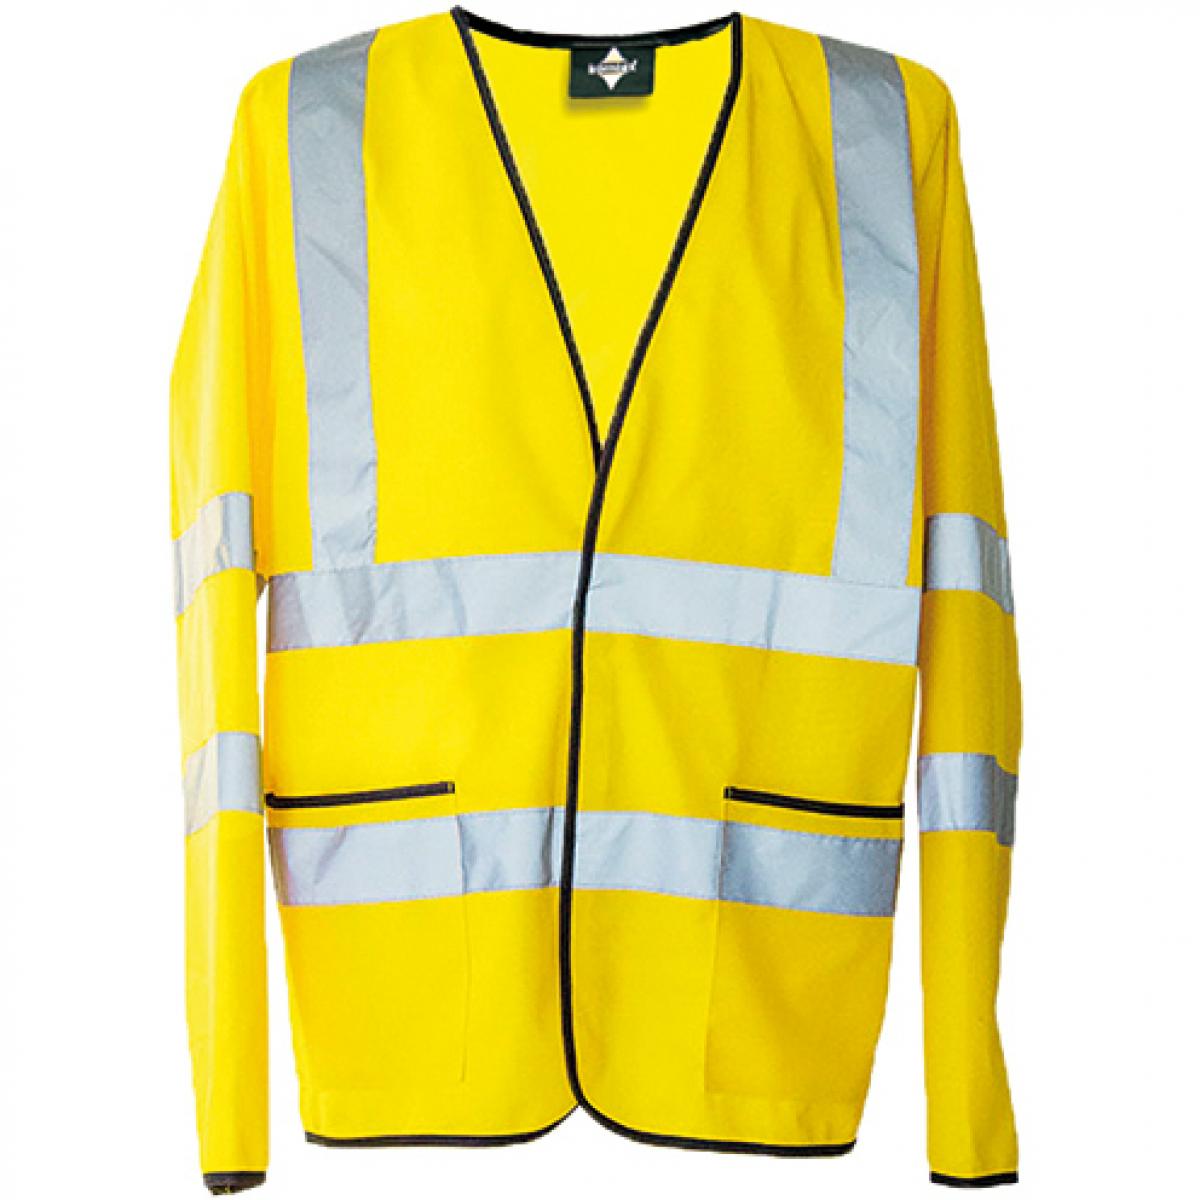 Hersteller: Korntex Herstellernummer: KXLWJ Artikelbezeichnung: Herren Light Weight Hi-Viz Jacket EN ISO 20471 Class 3 Farbe: Signal Yellow